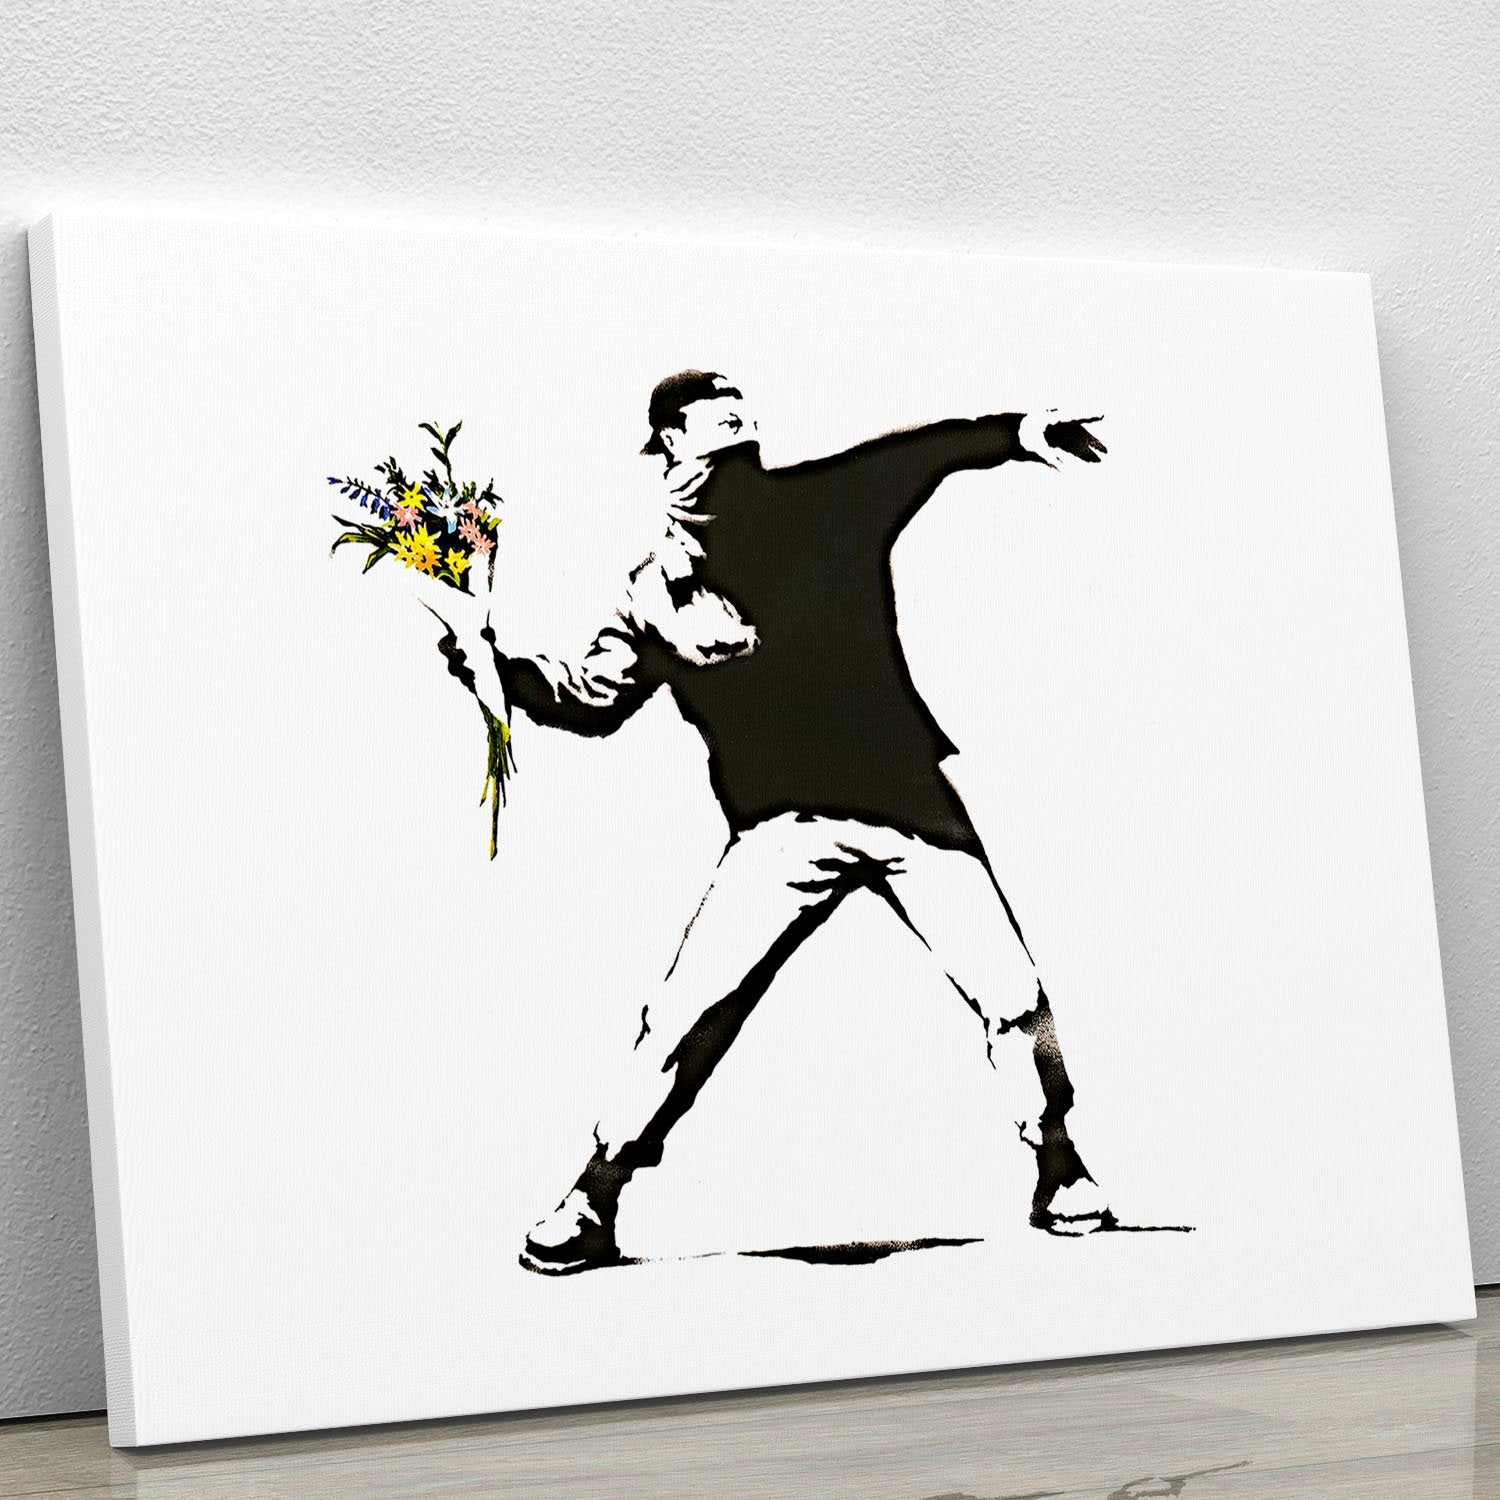 Banksy Flower Thrower Canvas Print & Poster